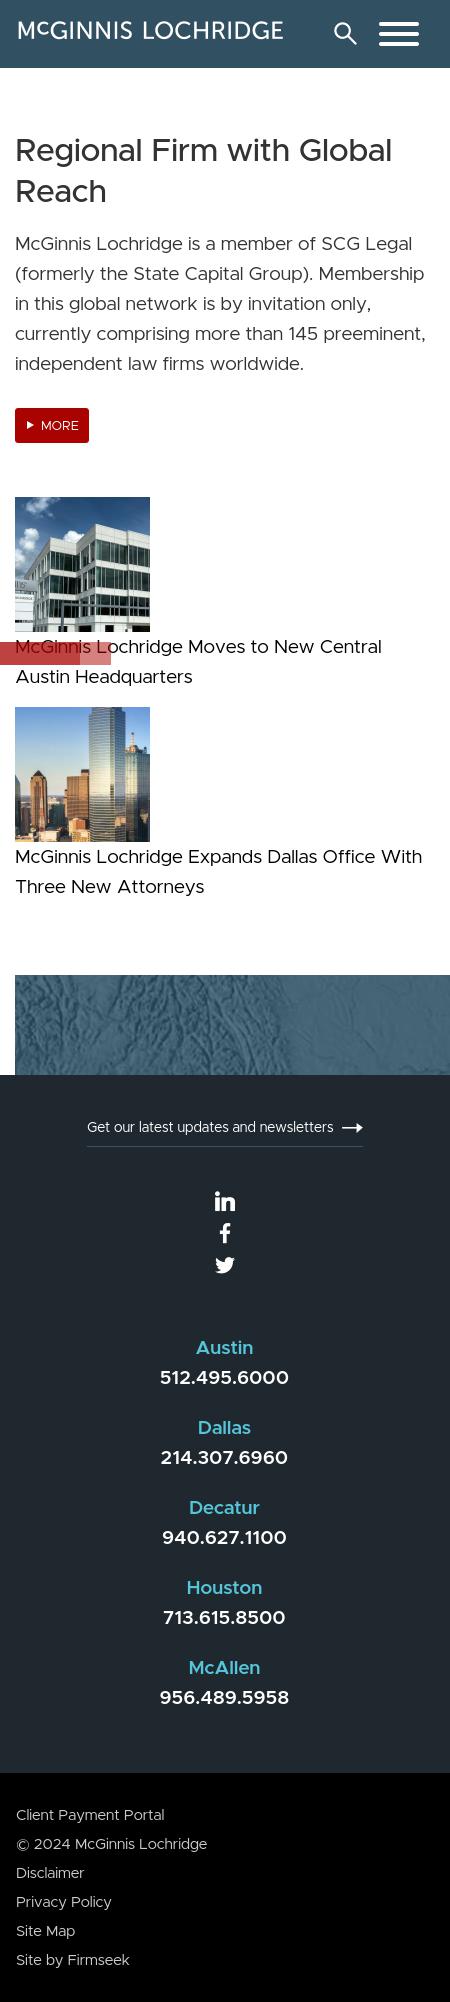 McGinnis Lochridge - Houston TX Lawyers